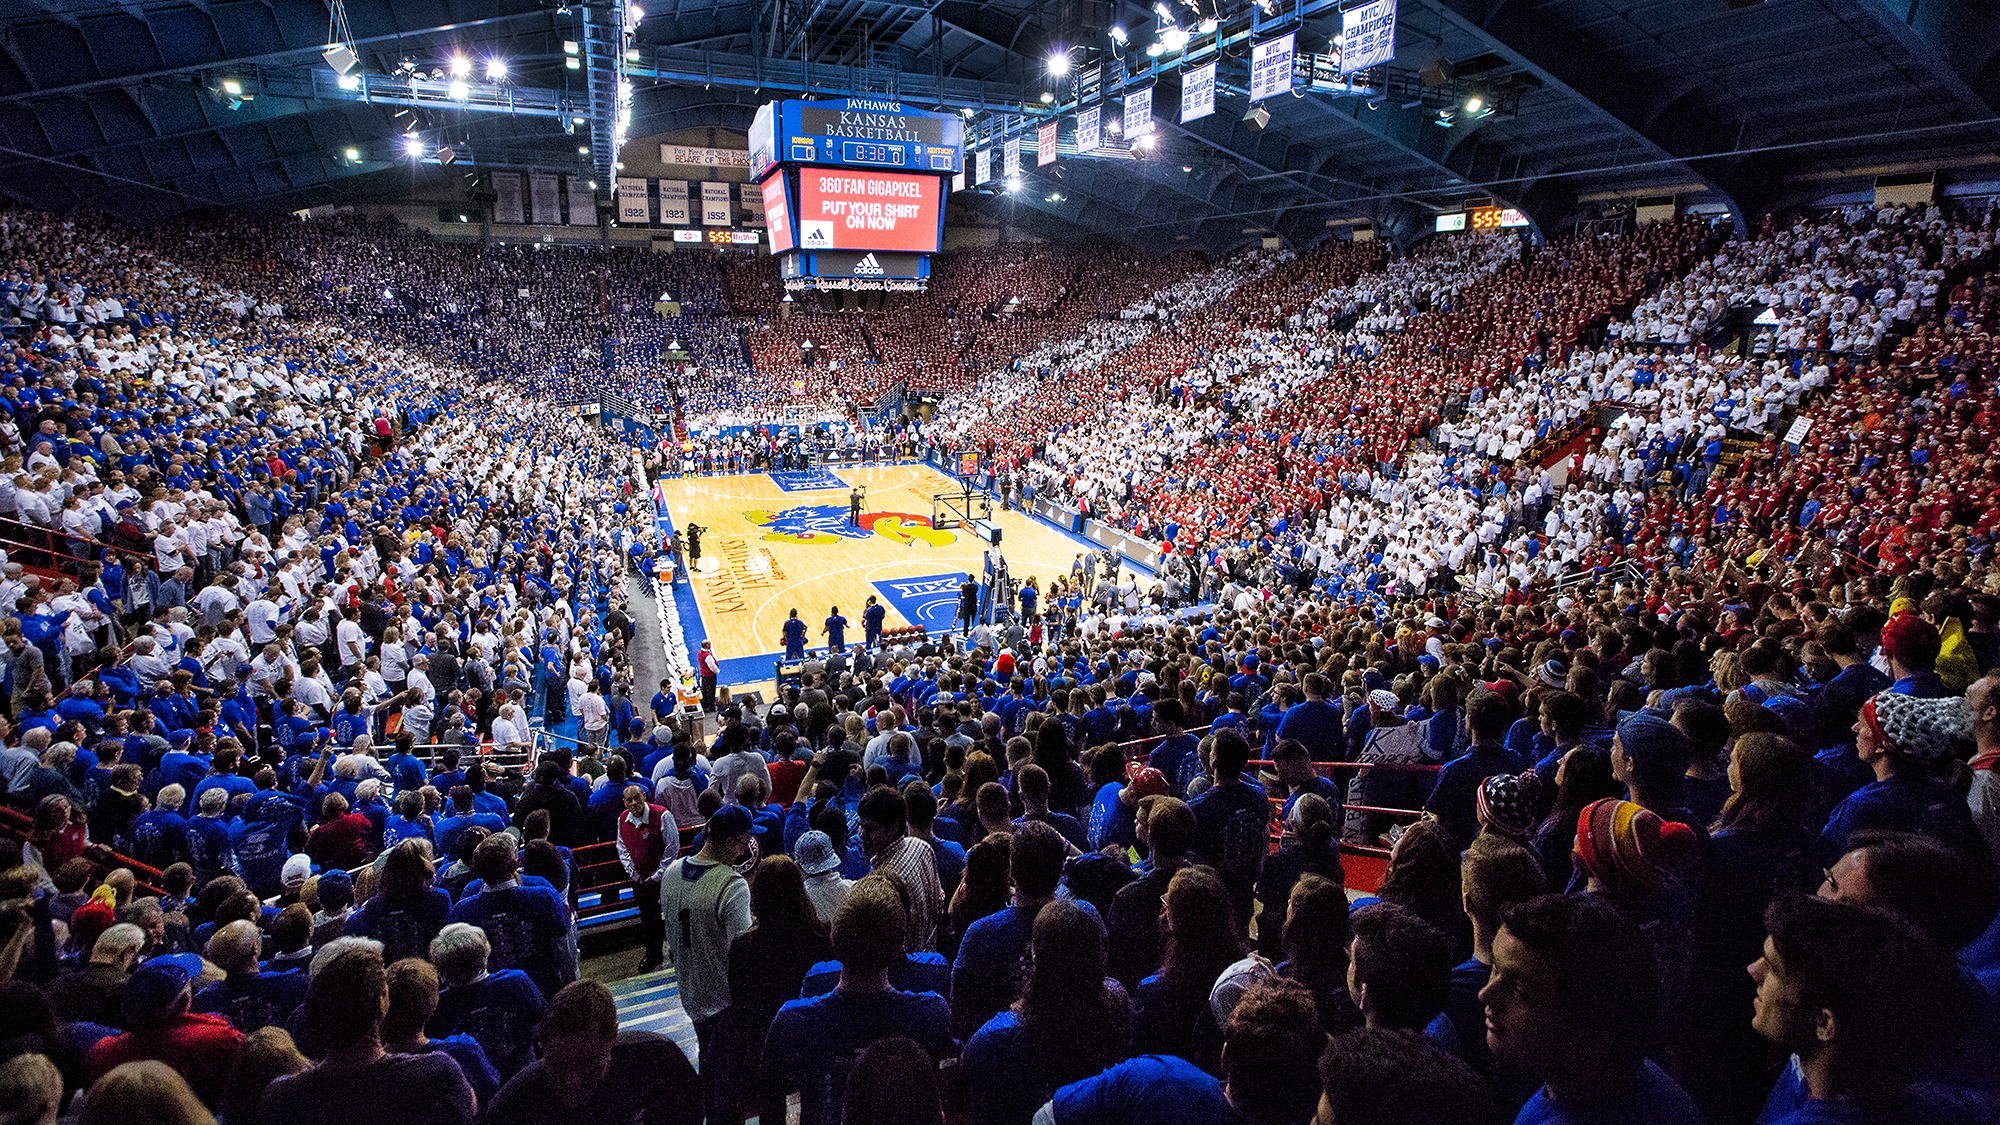 Kansas Basketball Arena / Ranking the top game atmosphere arenas in